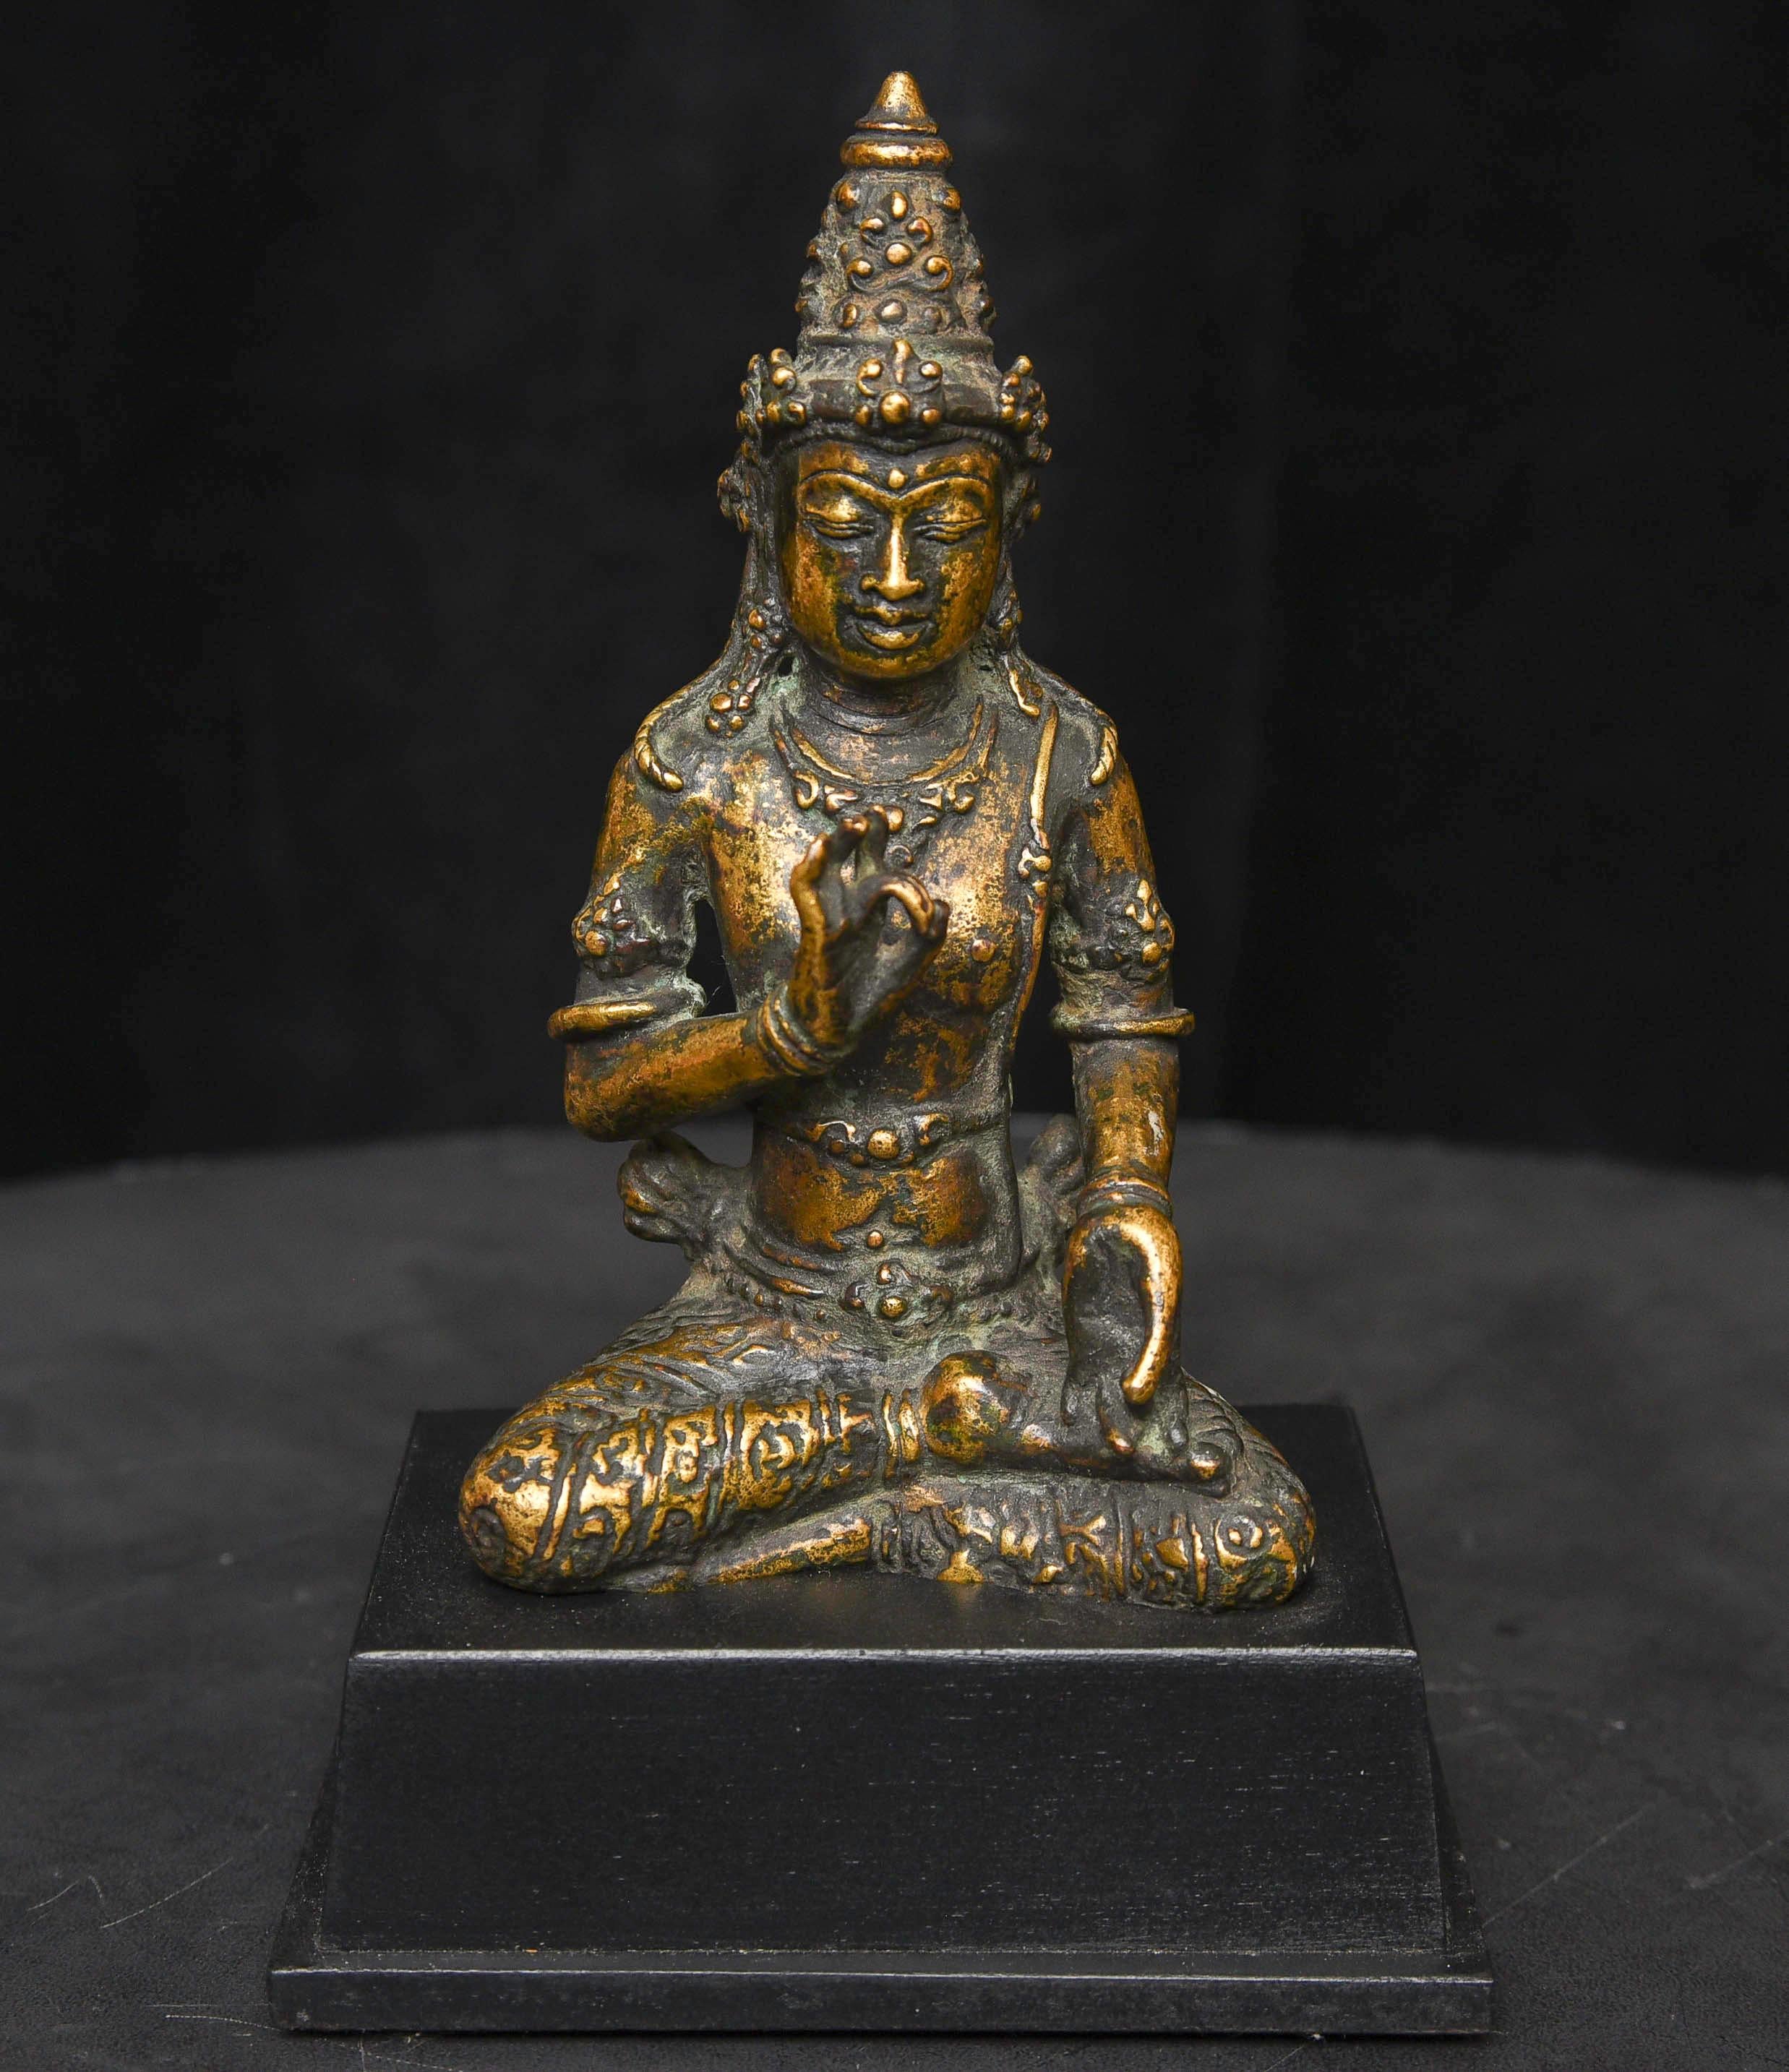 15-19thC Indonesian or Javanese Gilt Bronze Deities - 9591 For Sale 1